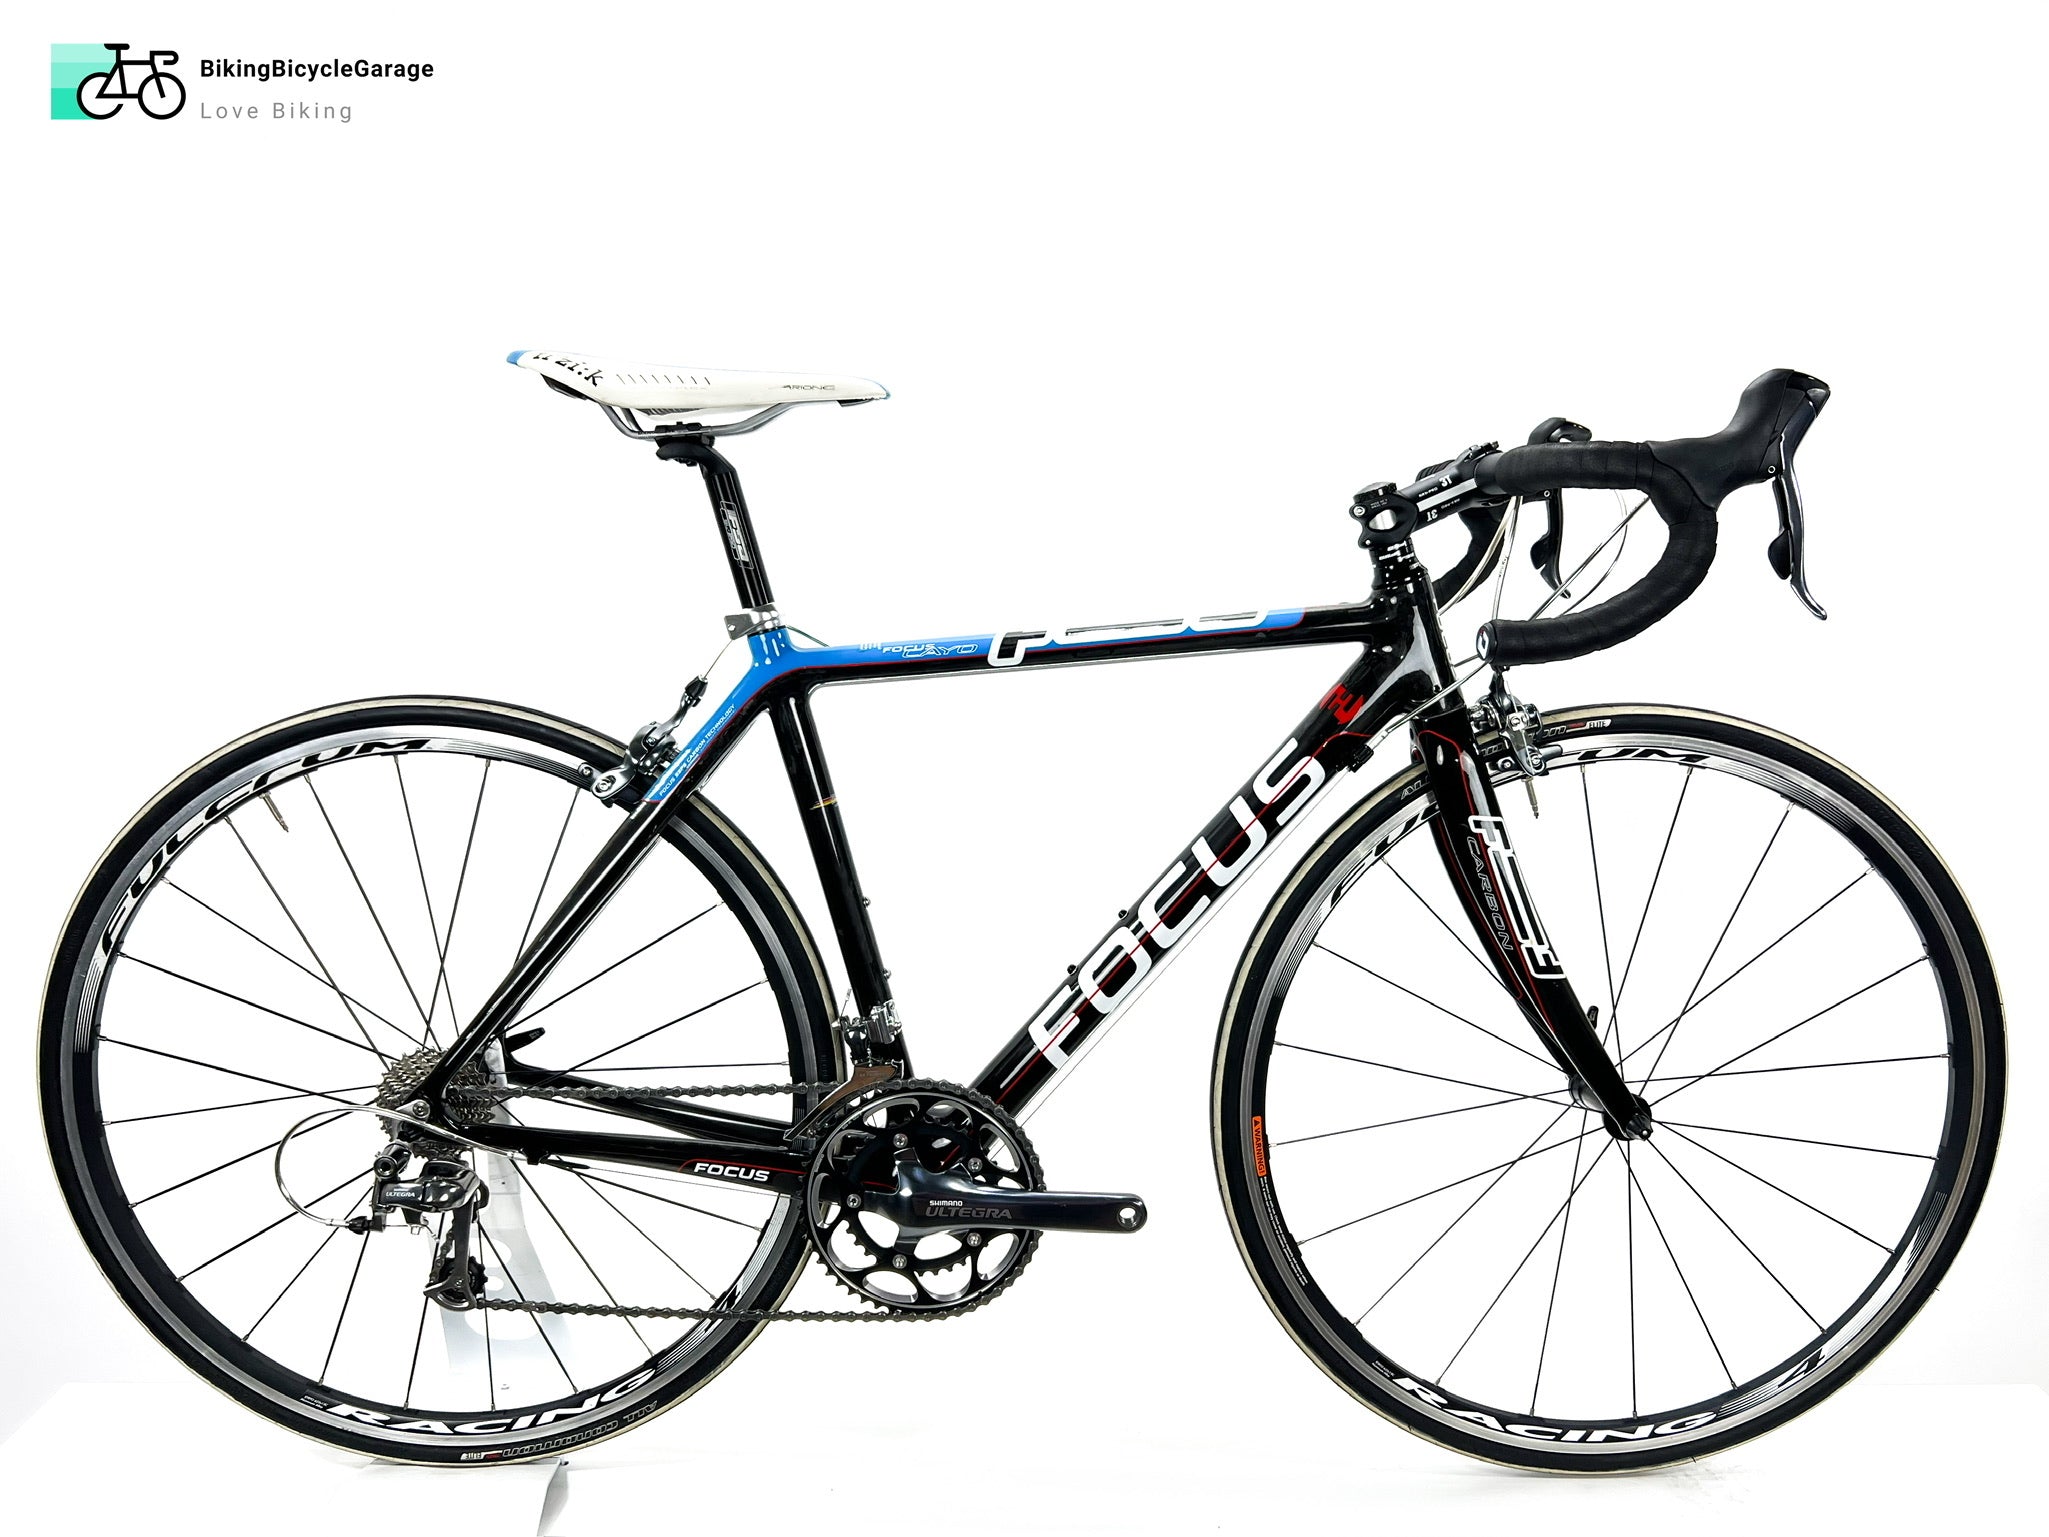 Focus Cayo, Shimano Ultegra, Carbon Fiber Road Bike-2010, 52cm